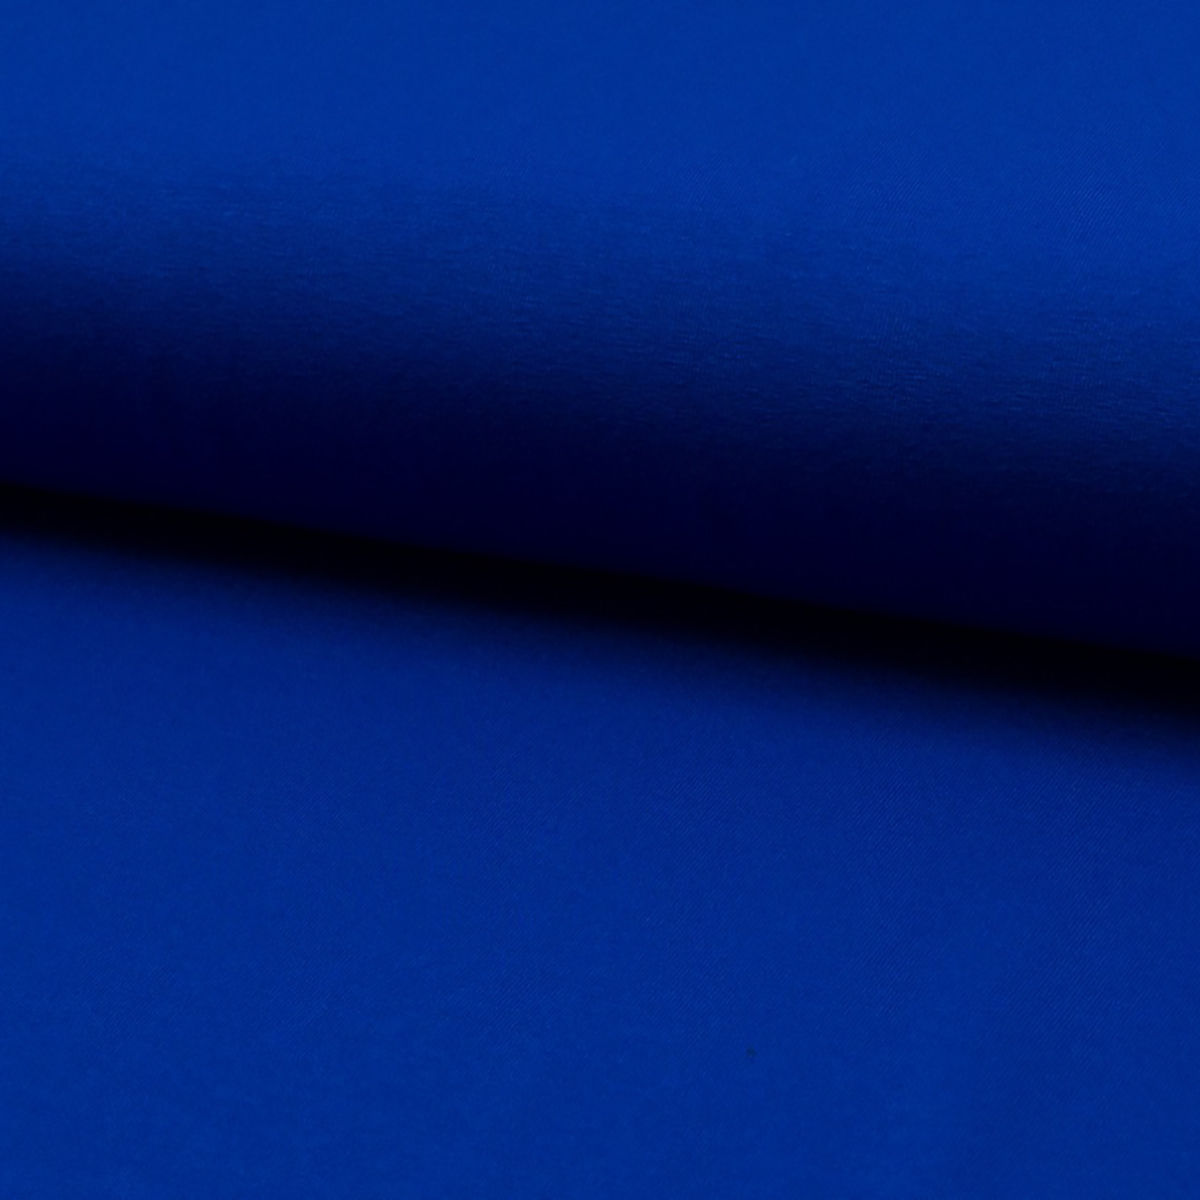 Elastik-Jersey schwer dunkel-royalblau, ÖkoTex-zertifiziert, 94% Viscose, 6% Elasthan, 150-160cm breit